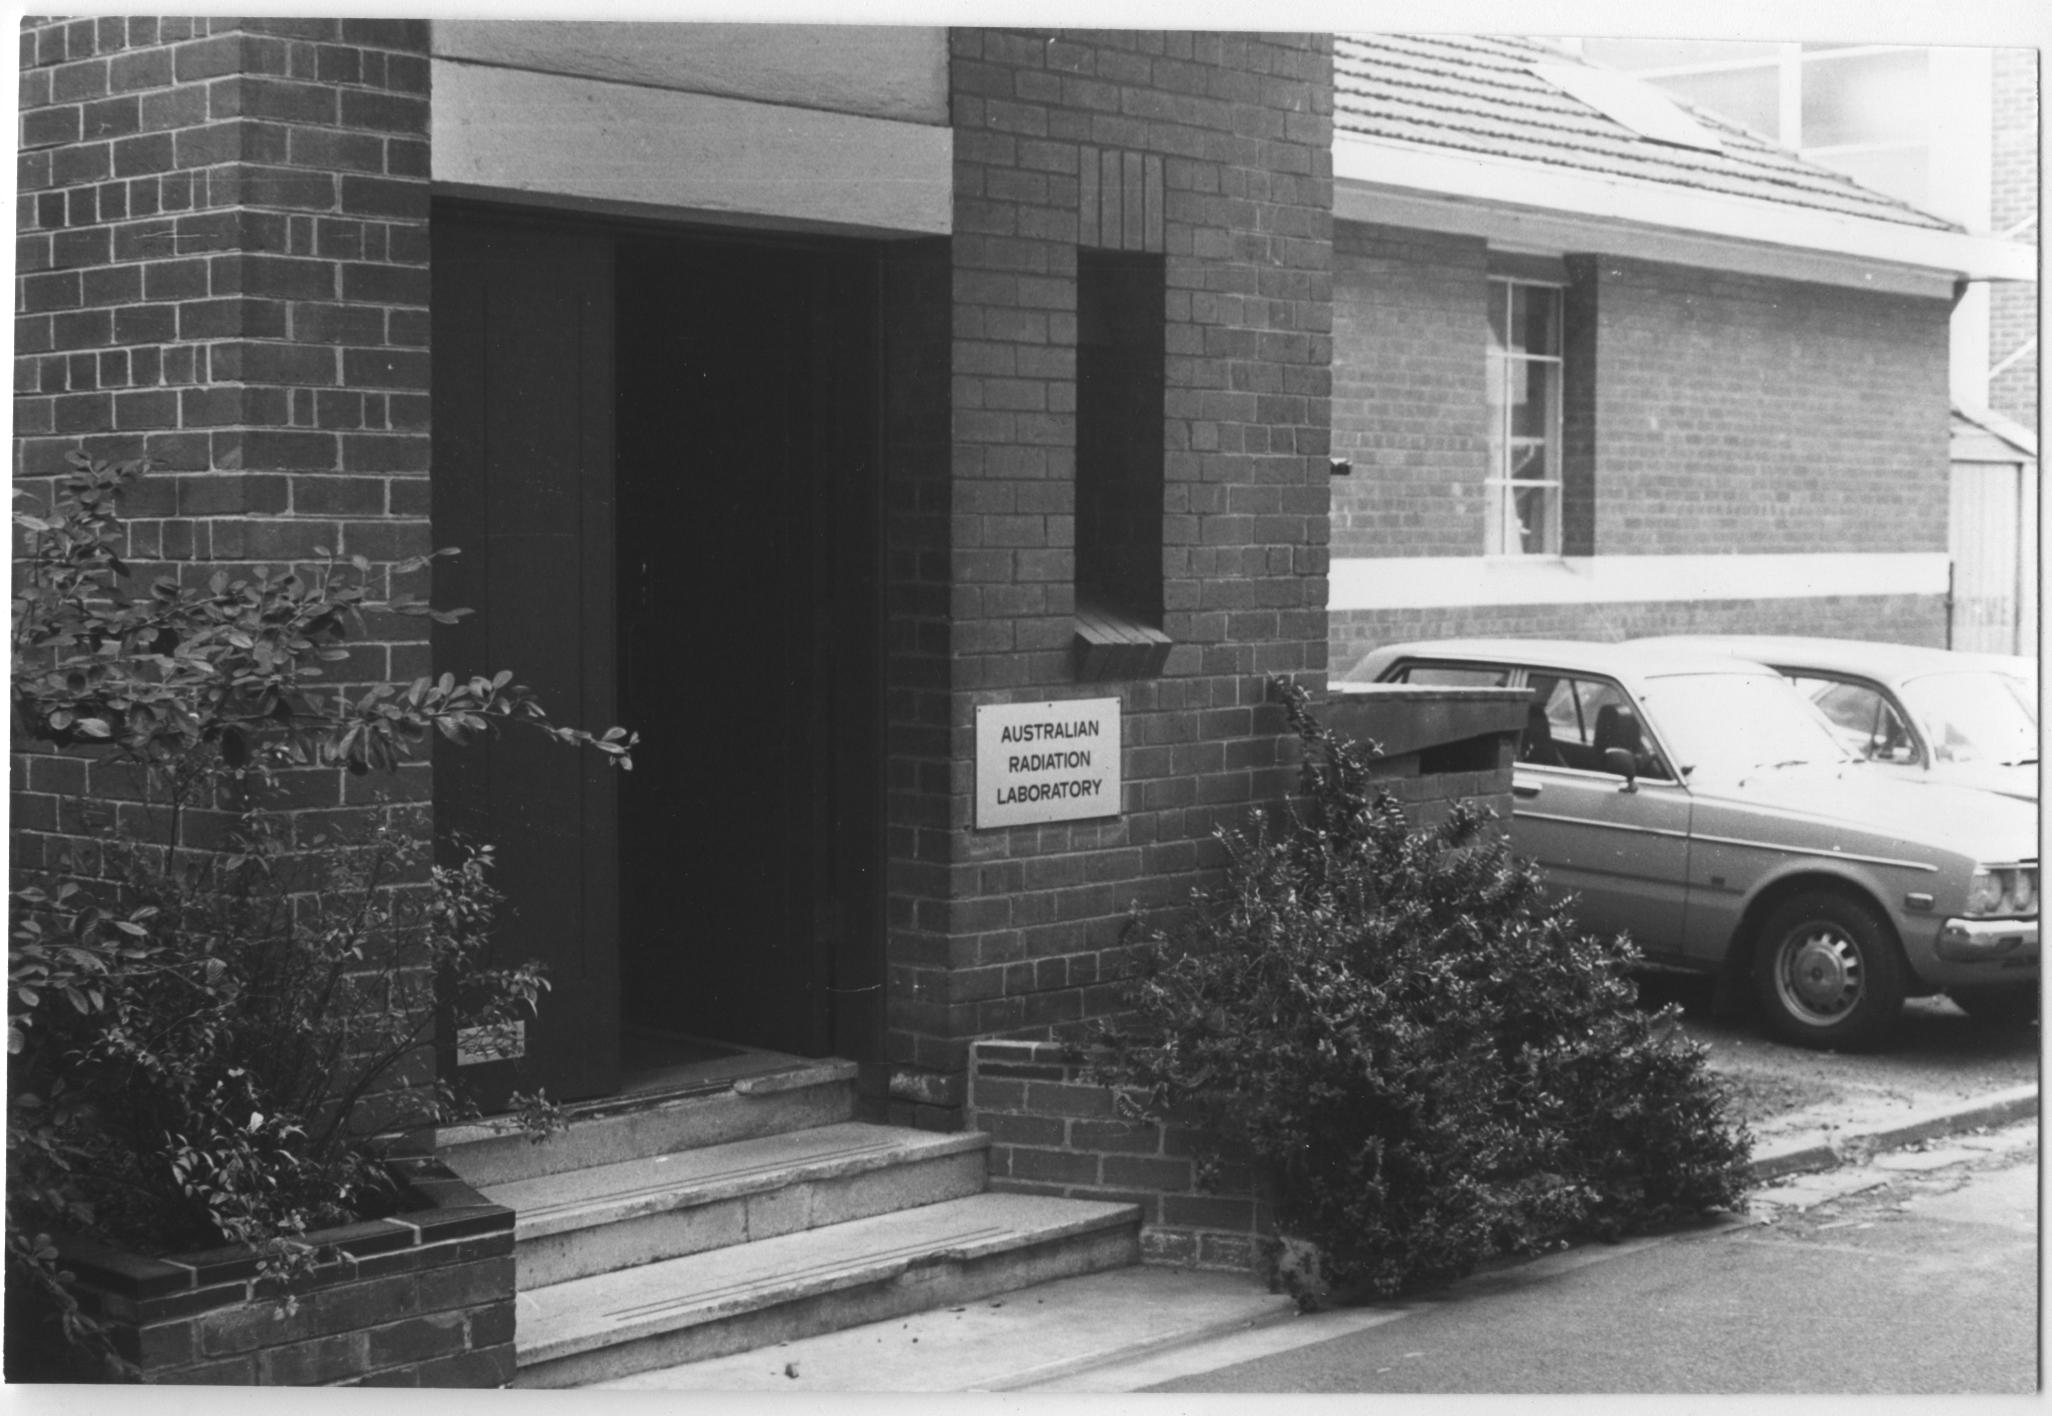 Former Australian Radiation Laboratory